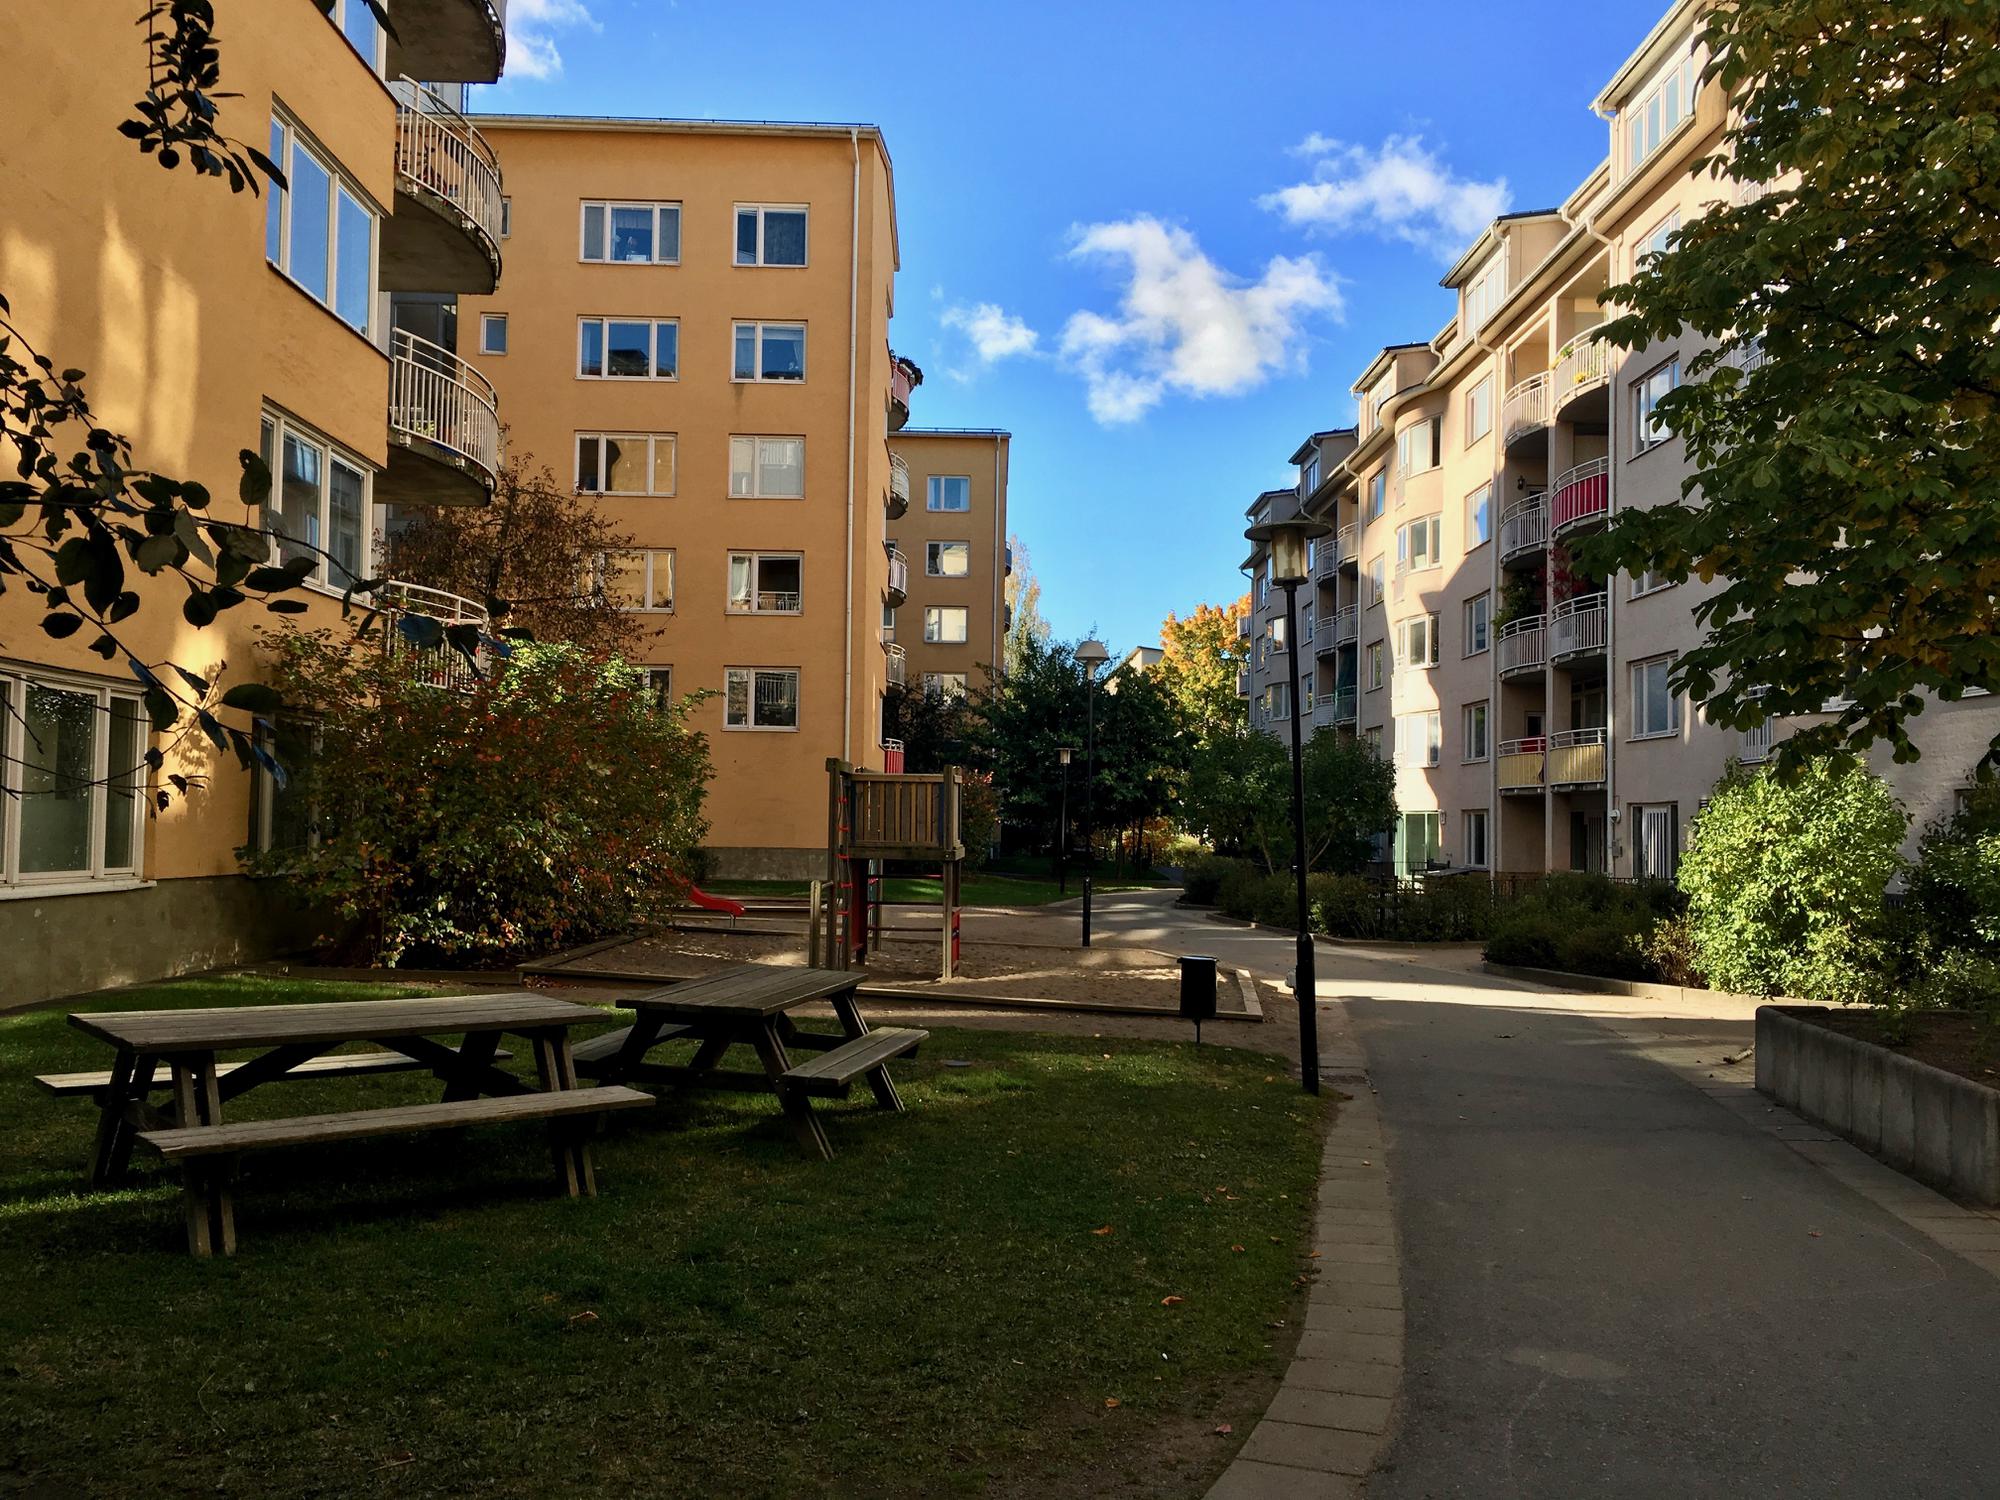 🇸🇪 Стокгольм, Швеция, октябрь 2016.